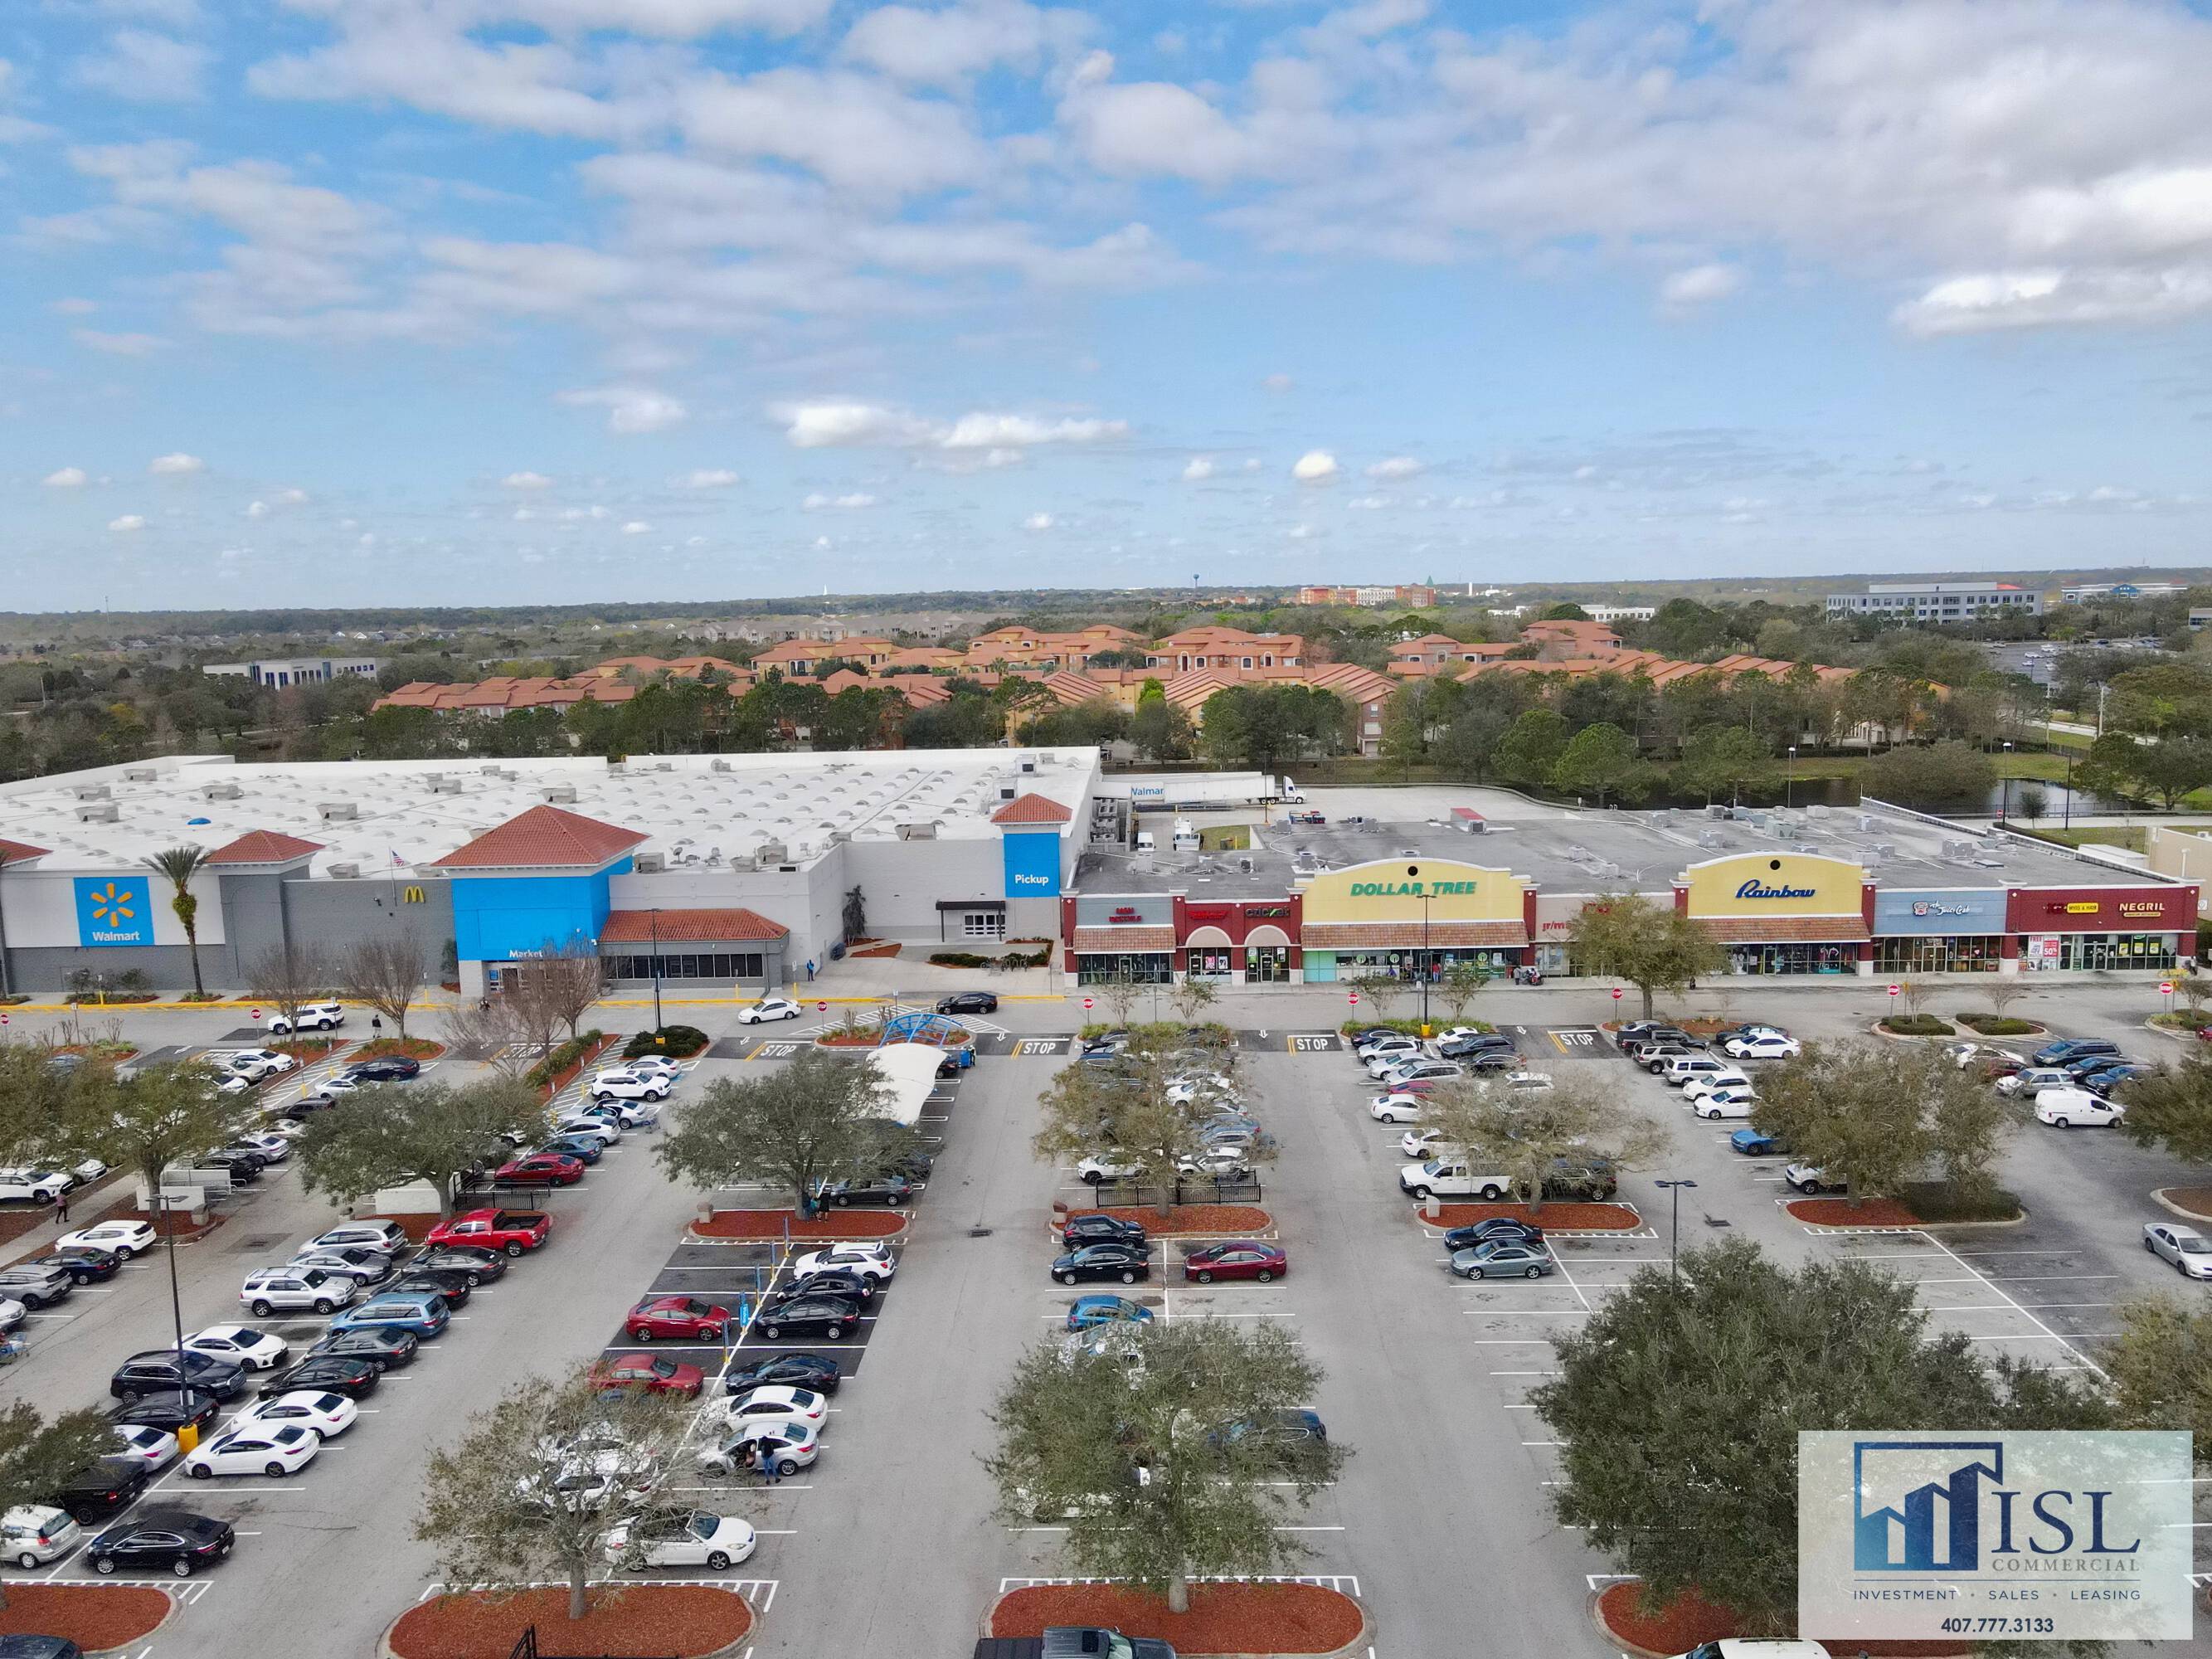 Shopping at Walmart Supercenter on Kirkman Road in Orlando, Florida - Store  1220 